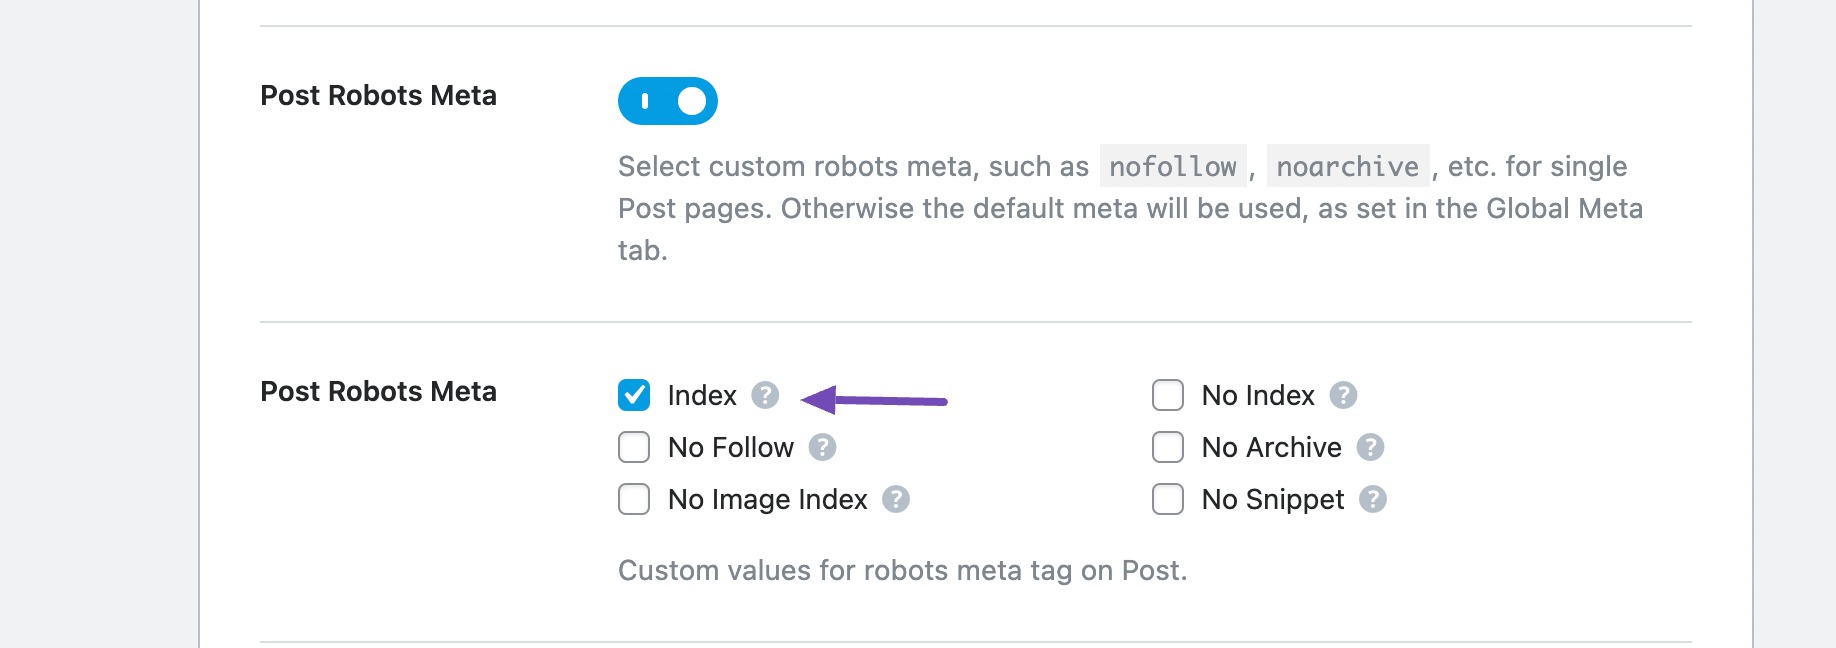 Check Post Robots Meta